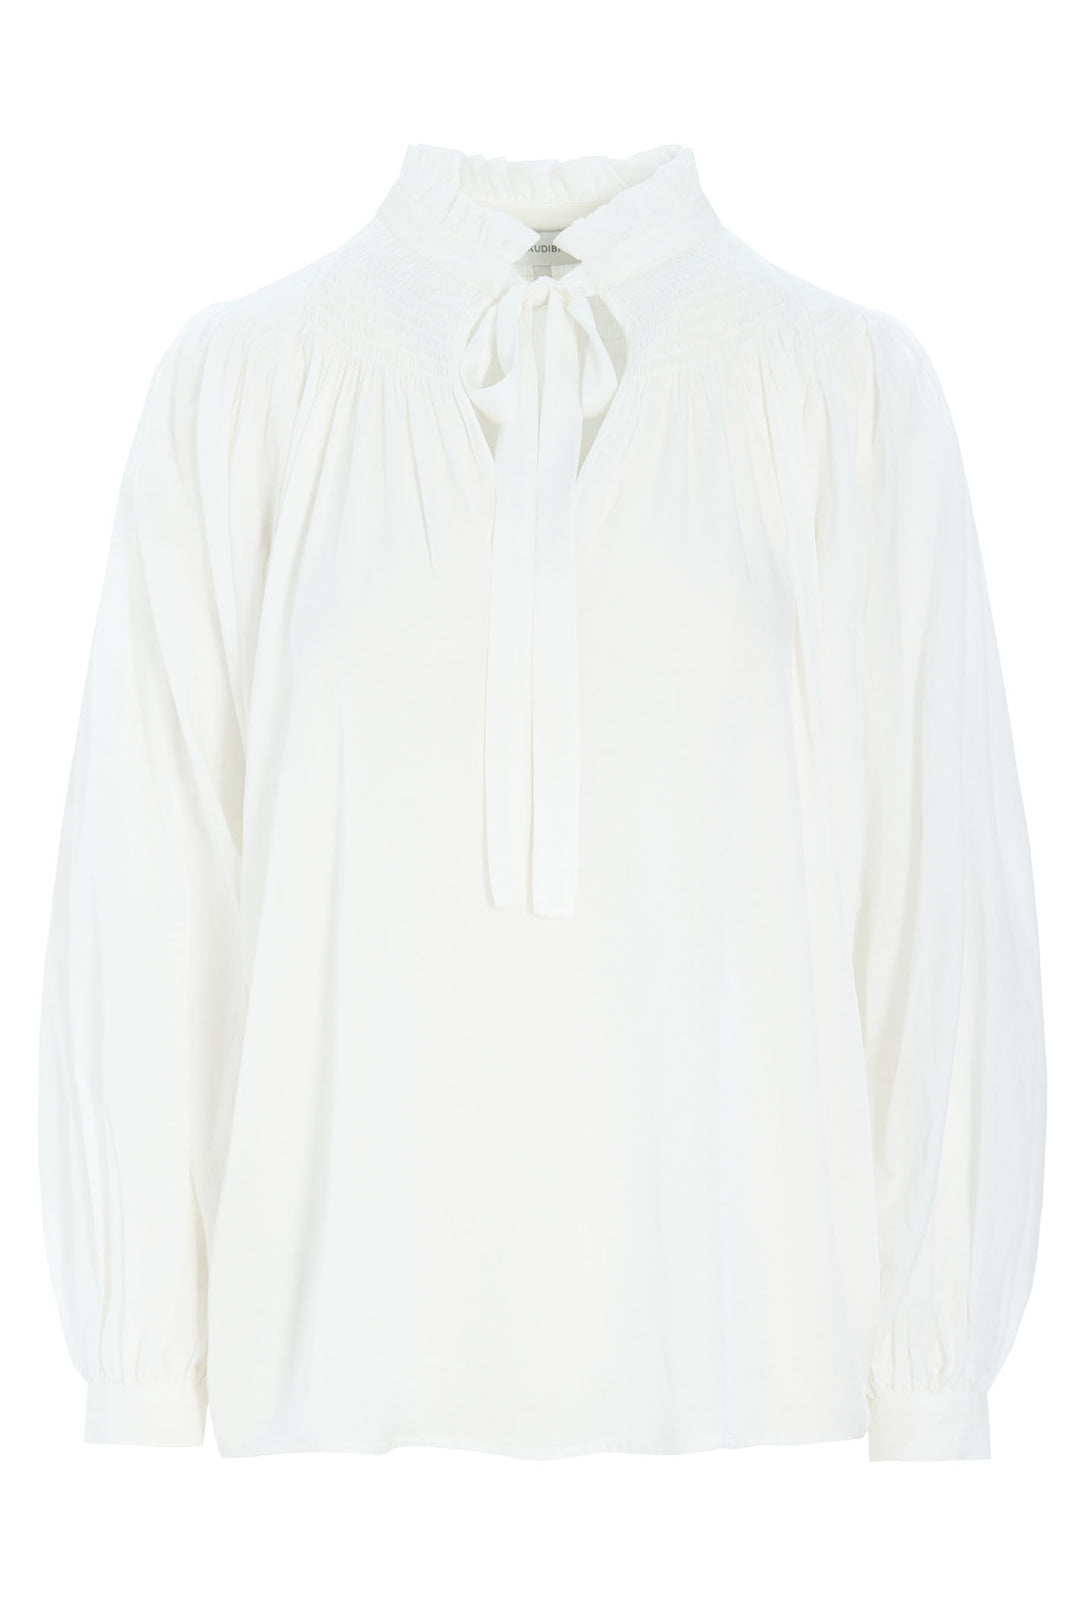 Dea Kudiba Malinka 1670124 1002 Natural White Silk Smocked Blouse - Olivia Grace Fashion